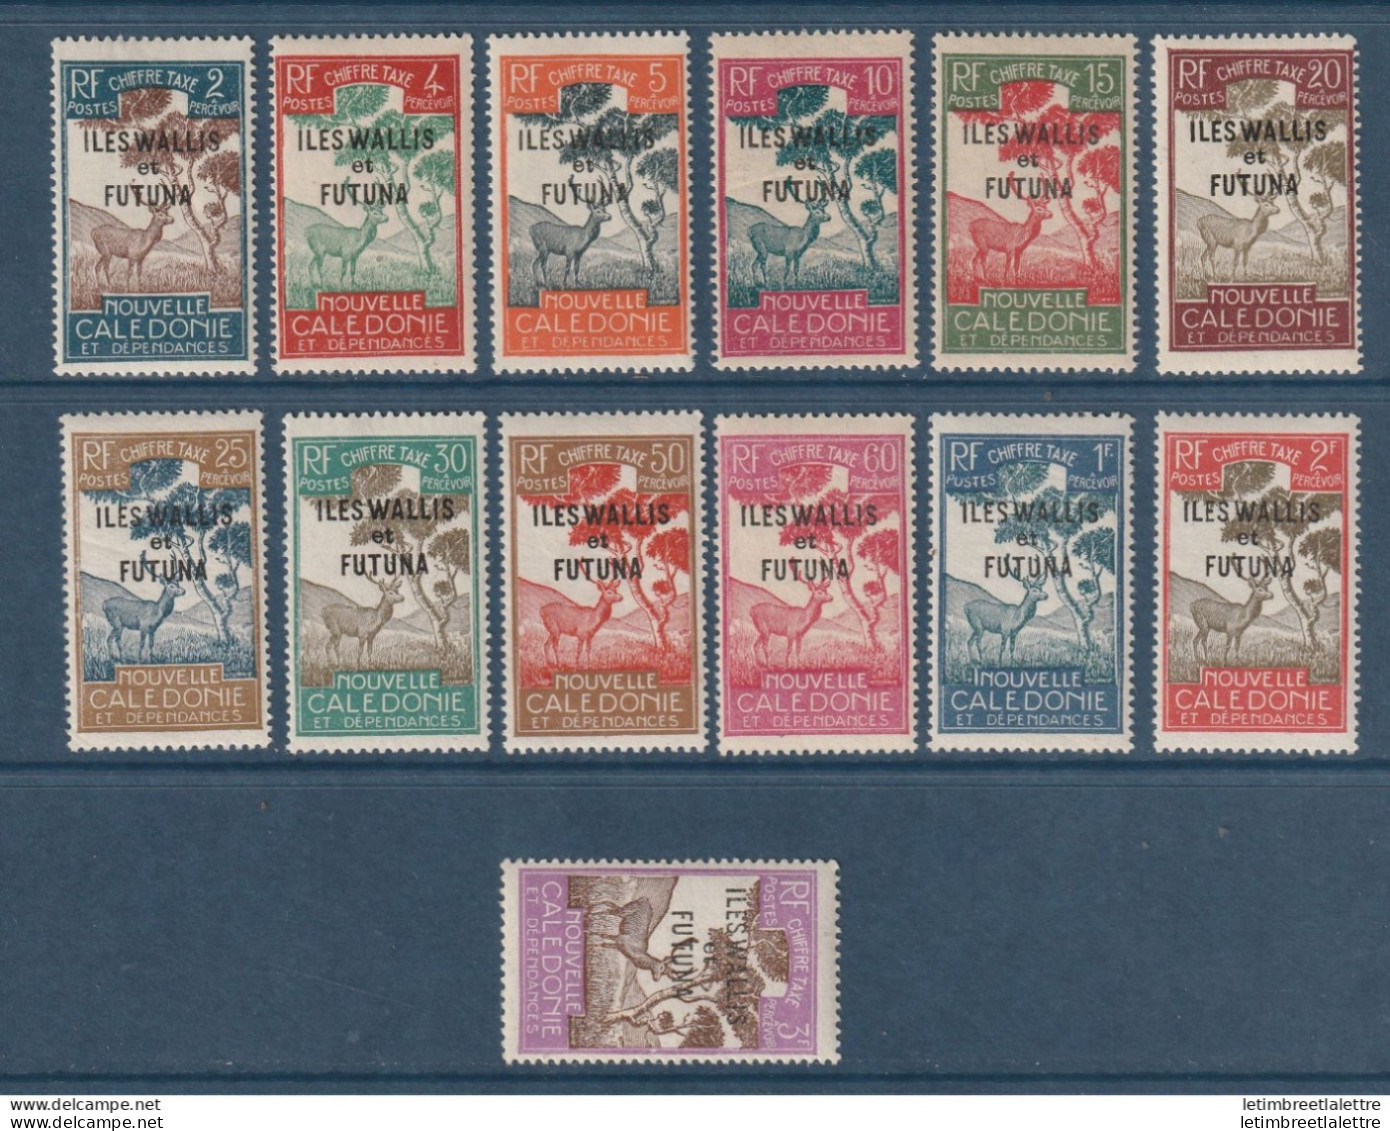 Wallis Et Futuna - Taxe - YT N° 11 à 23 * - Neuf Avec Charnière - 1930 - Timbres-taxe